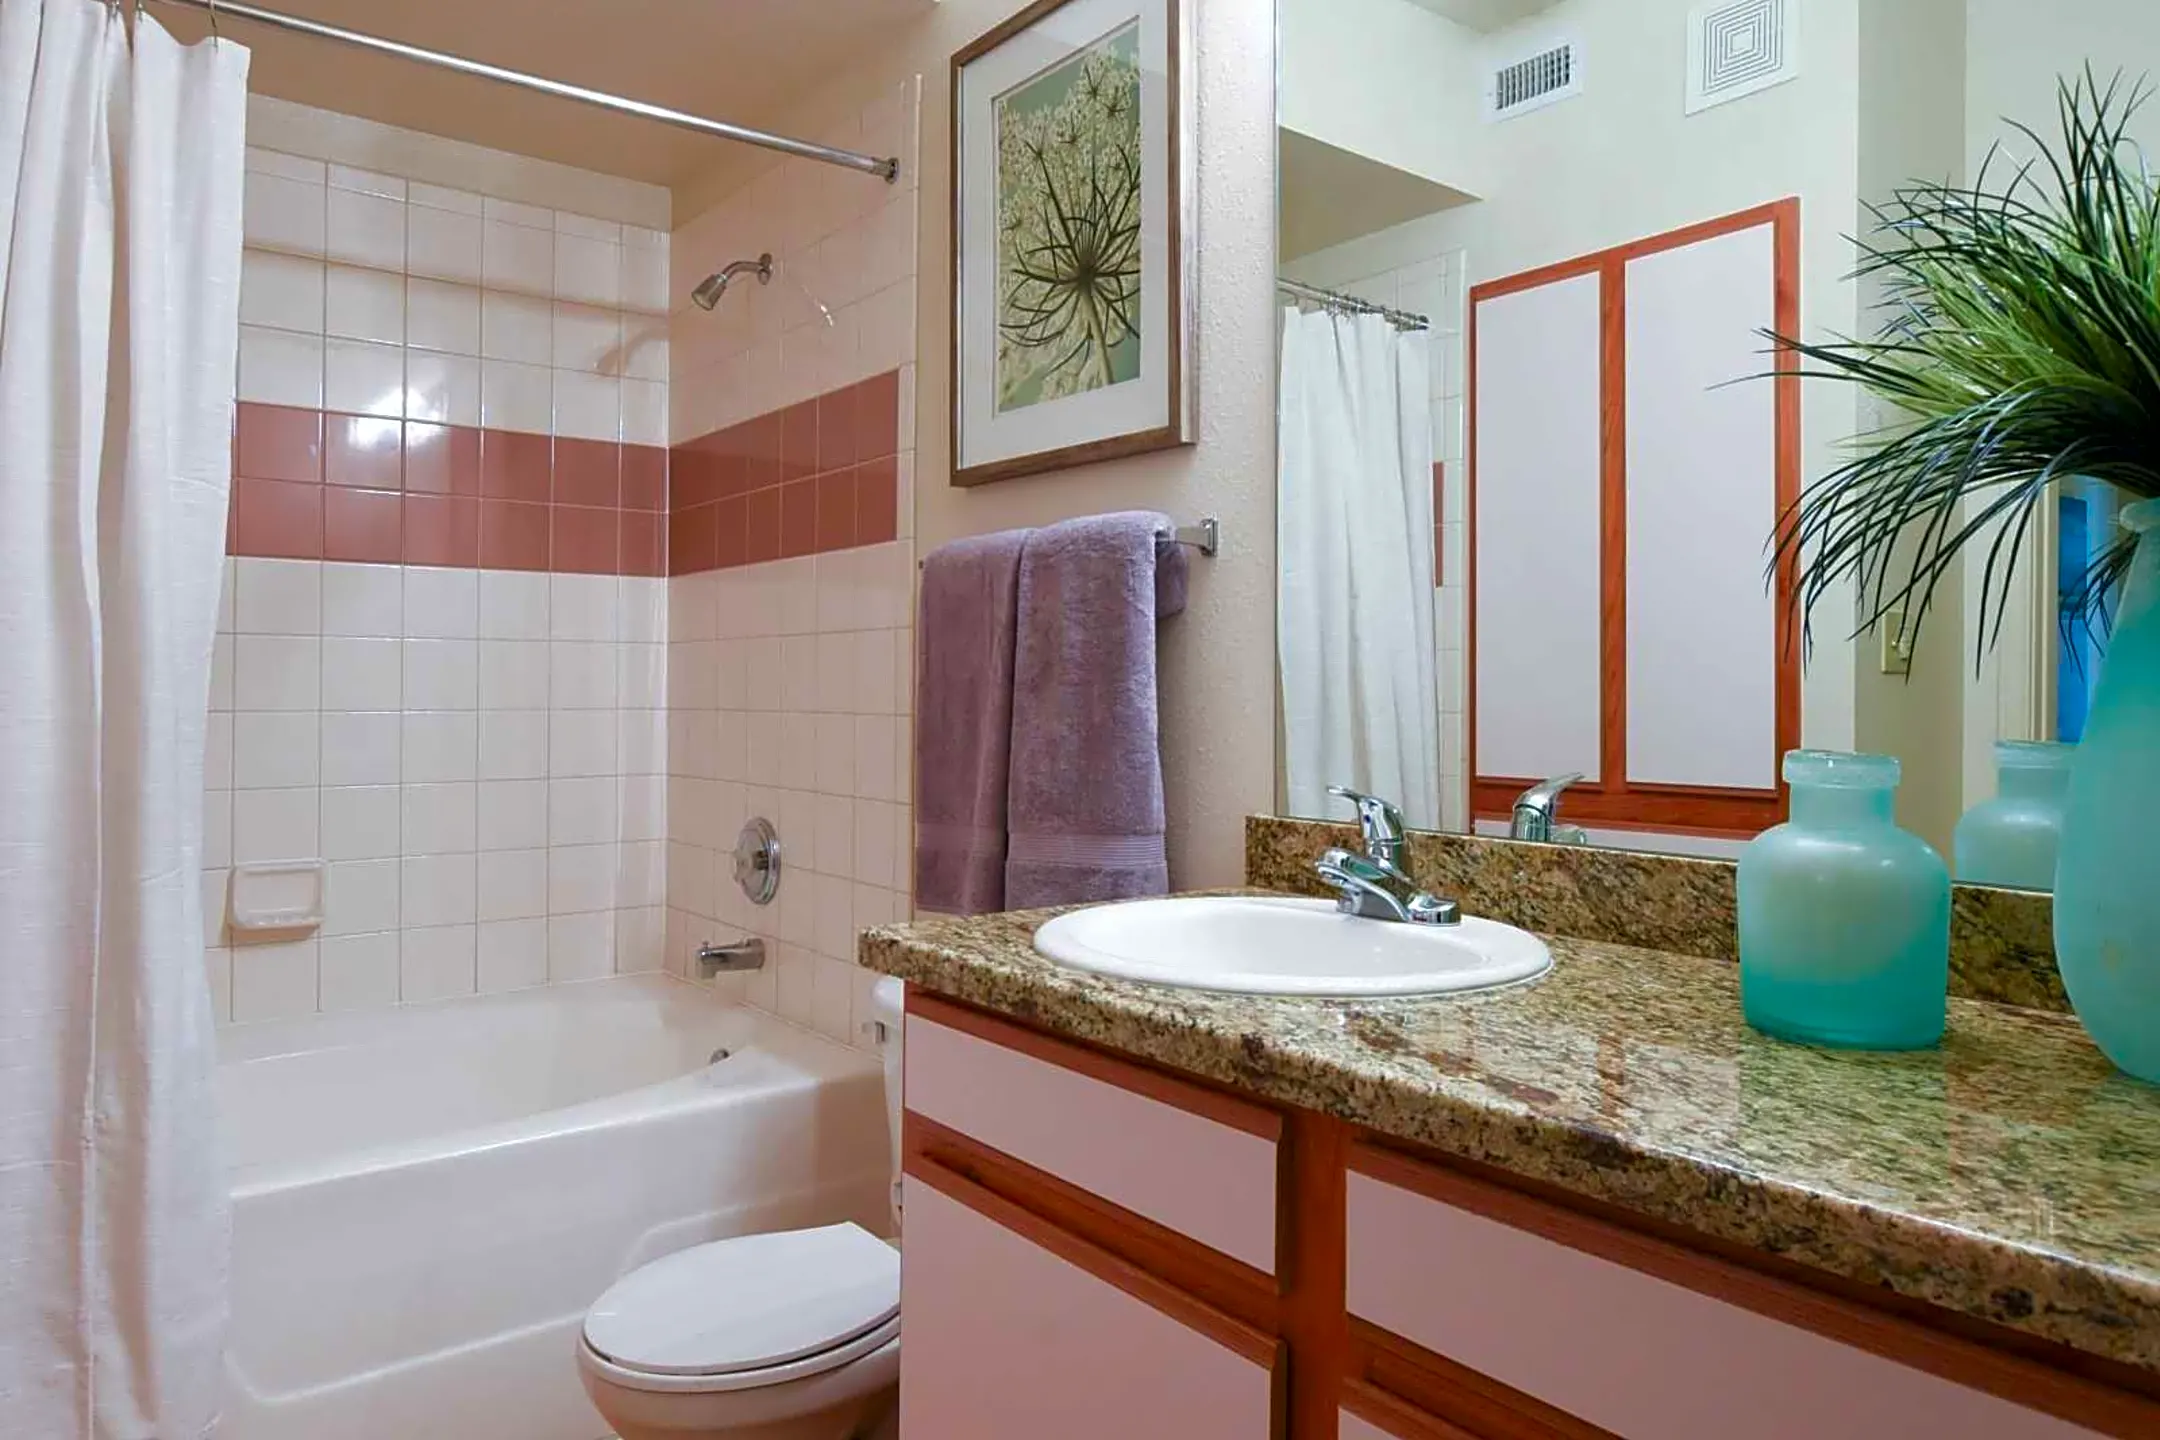 Bathroom - Carmel Apartment Homes - Laredo, TX